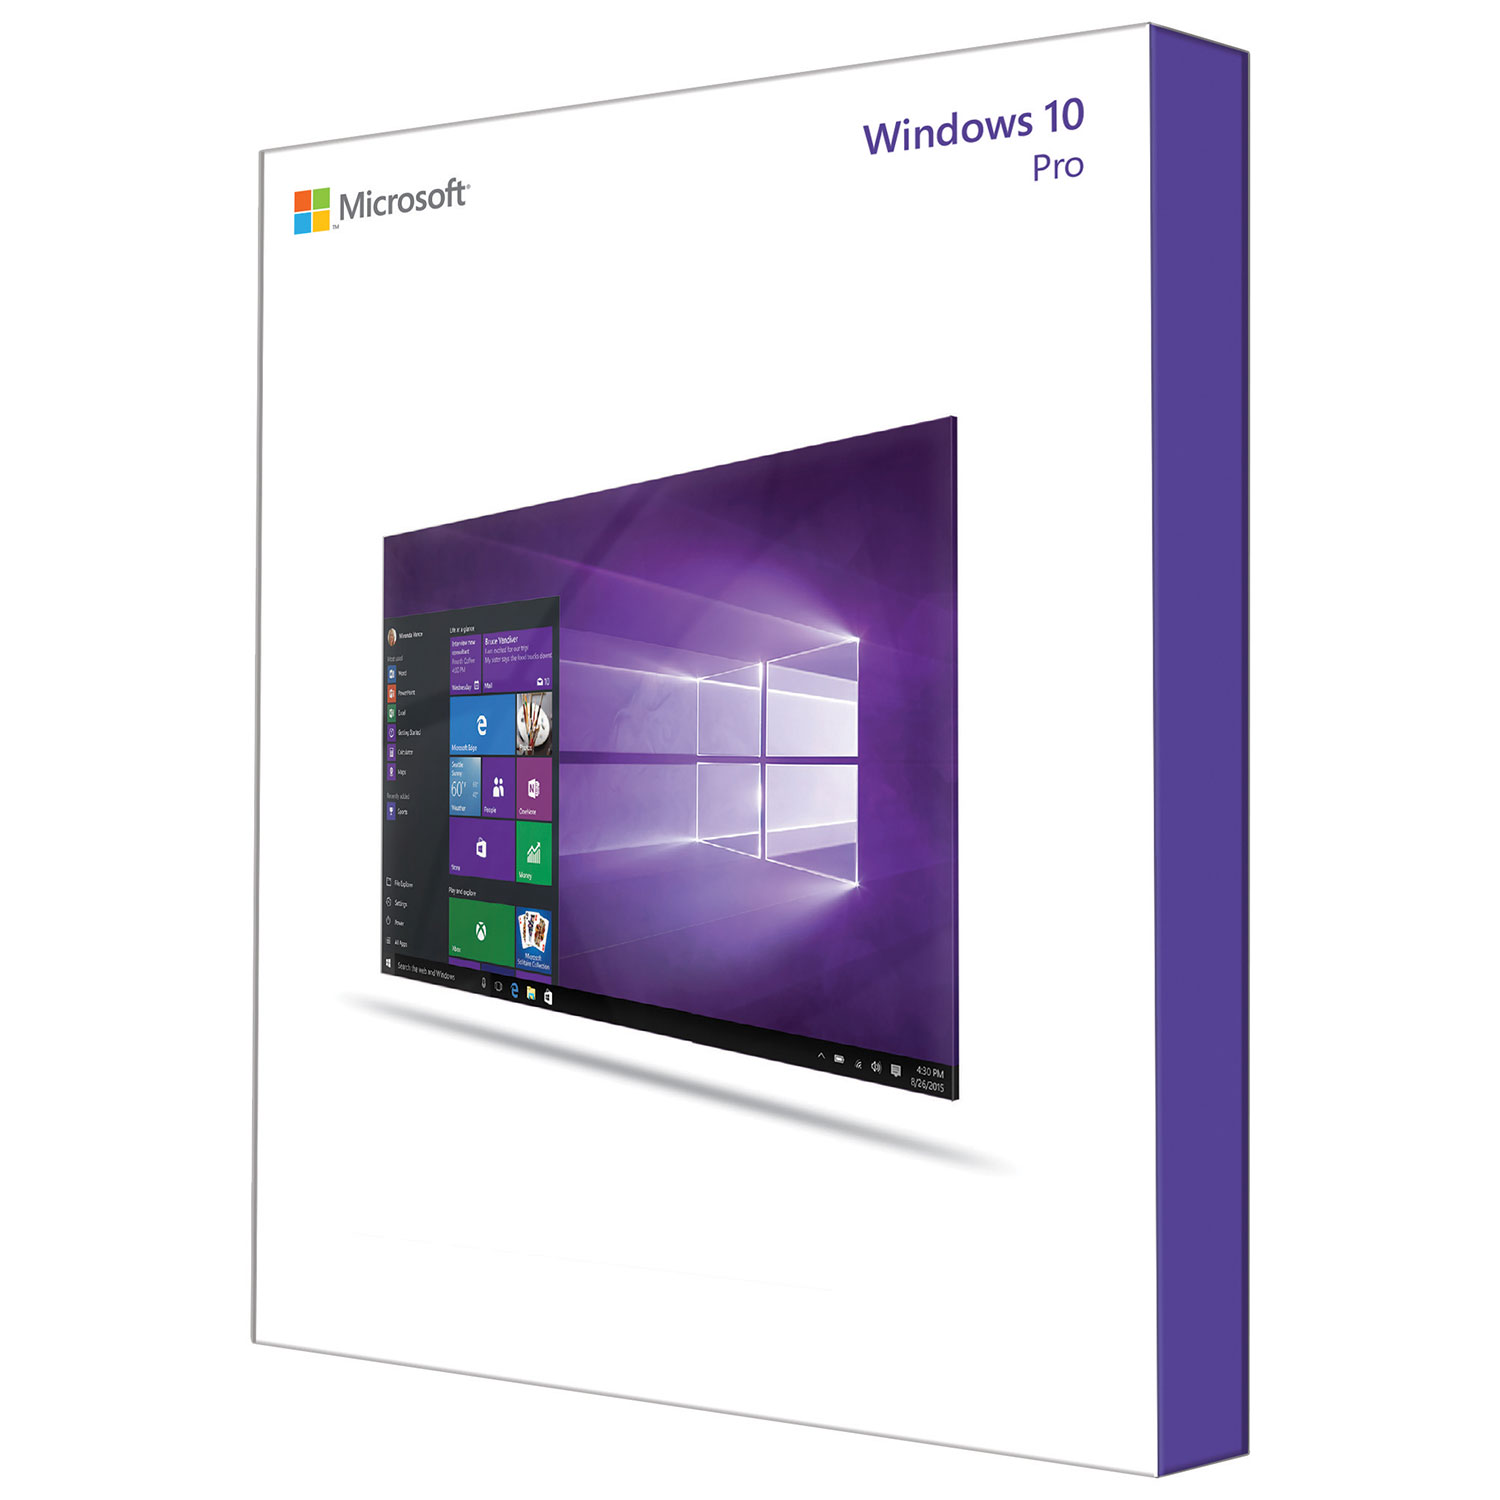 Windows 10 professional Product Key